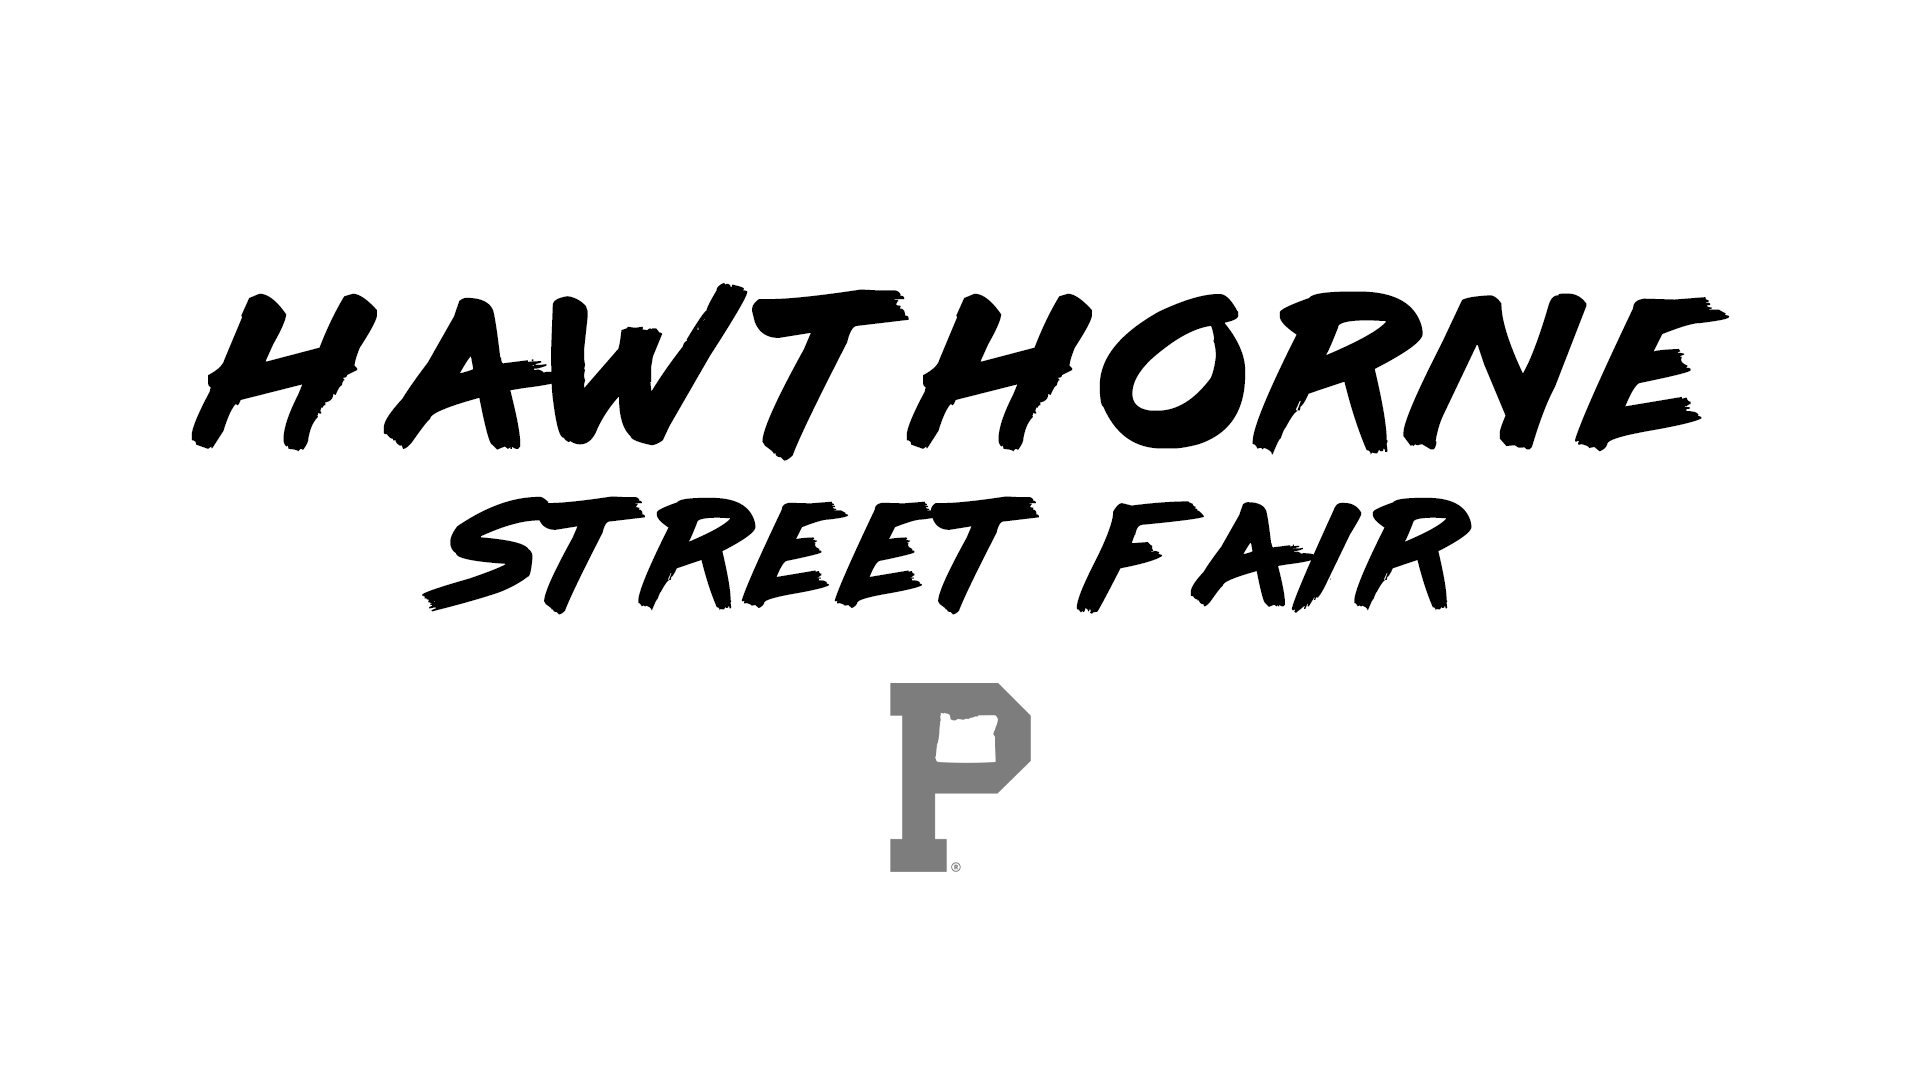 Hawthorne Street Fair - Portland Gear